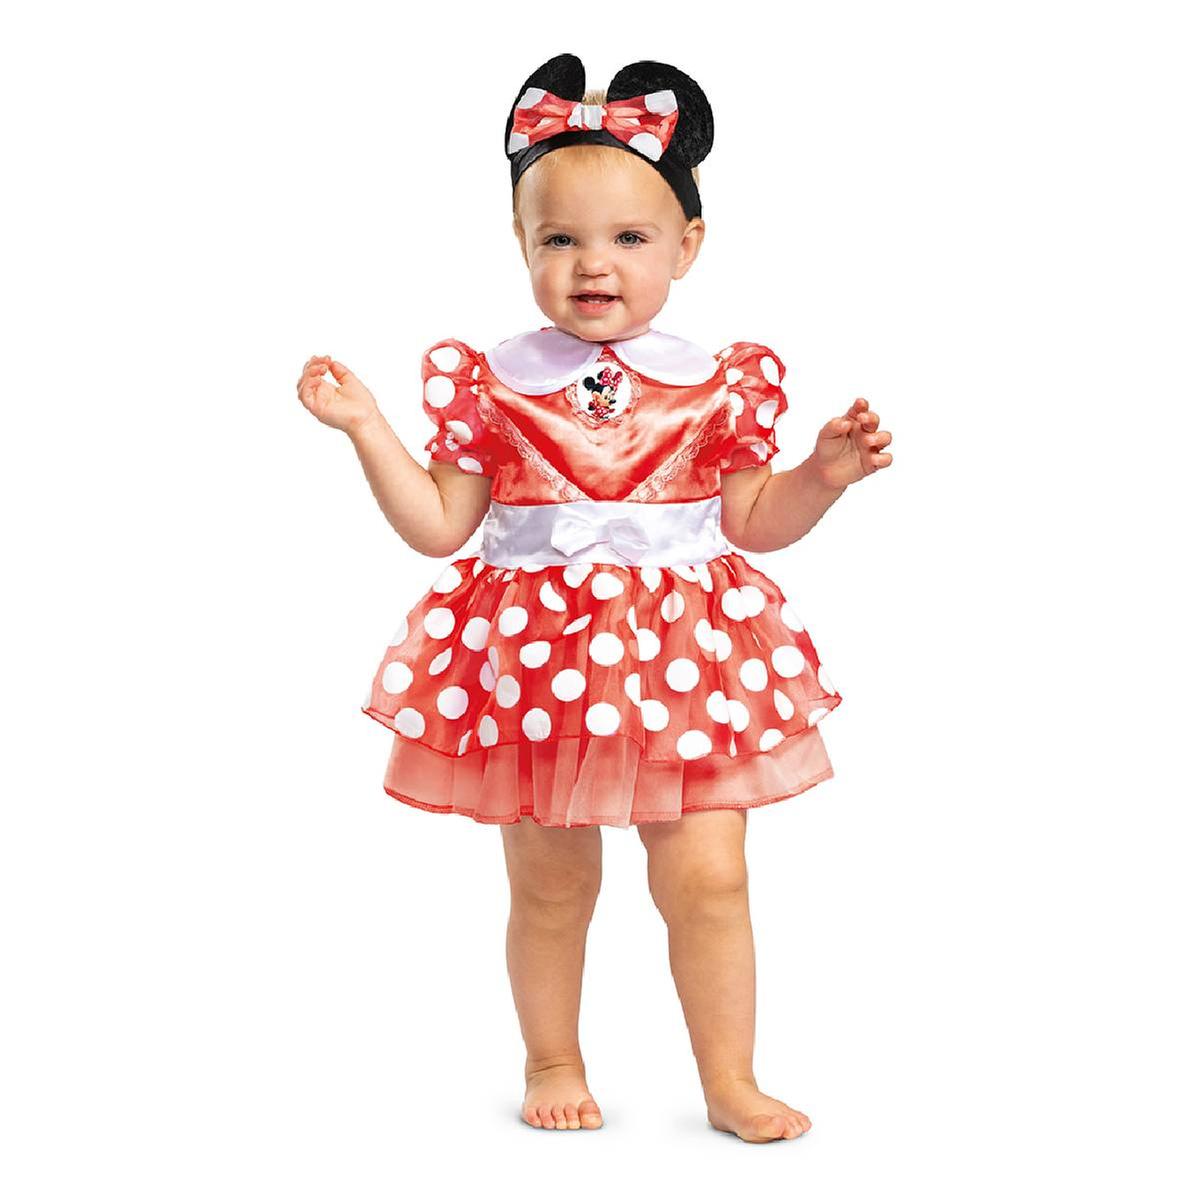 Minnie Mouse - Disfraz infantil 12-18 meses, Halloween Disfraz Niño